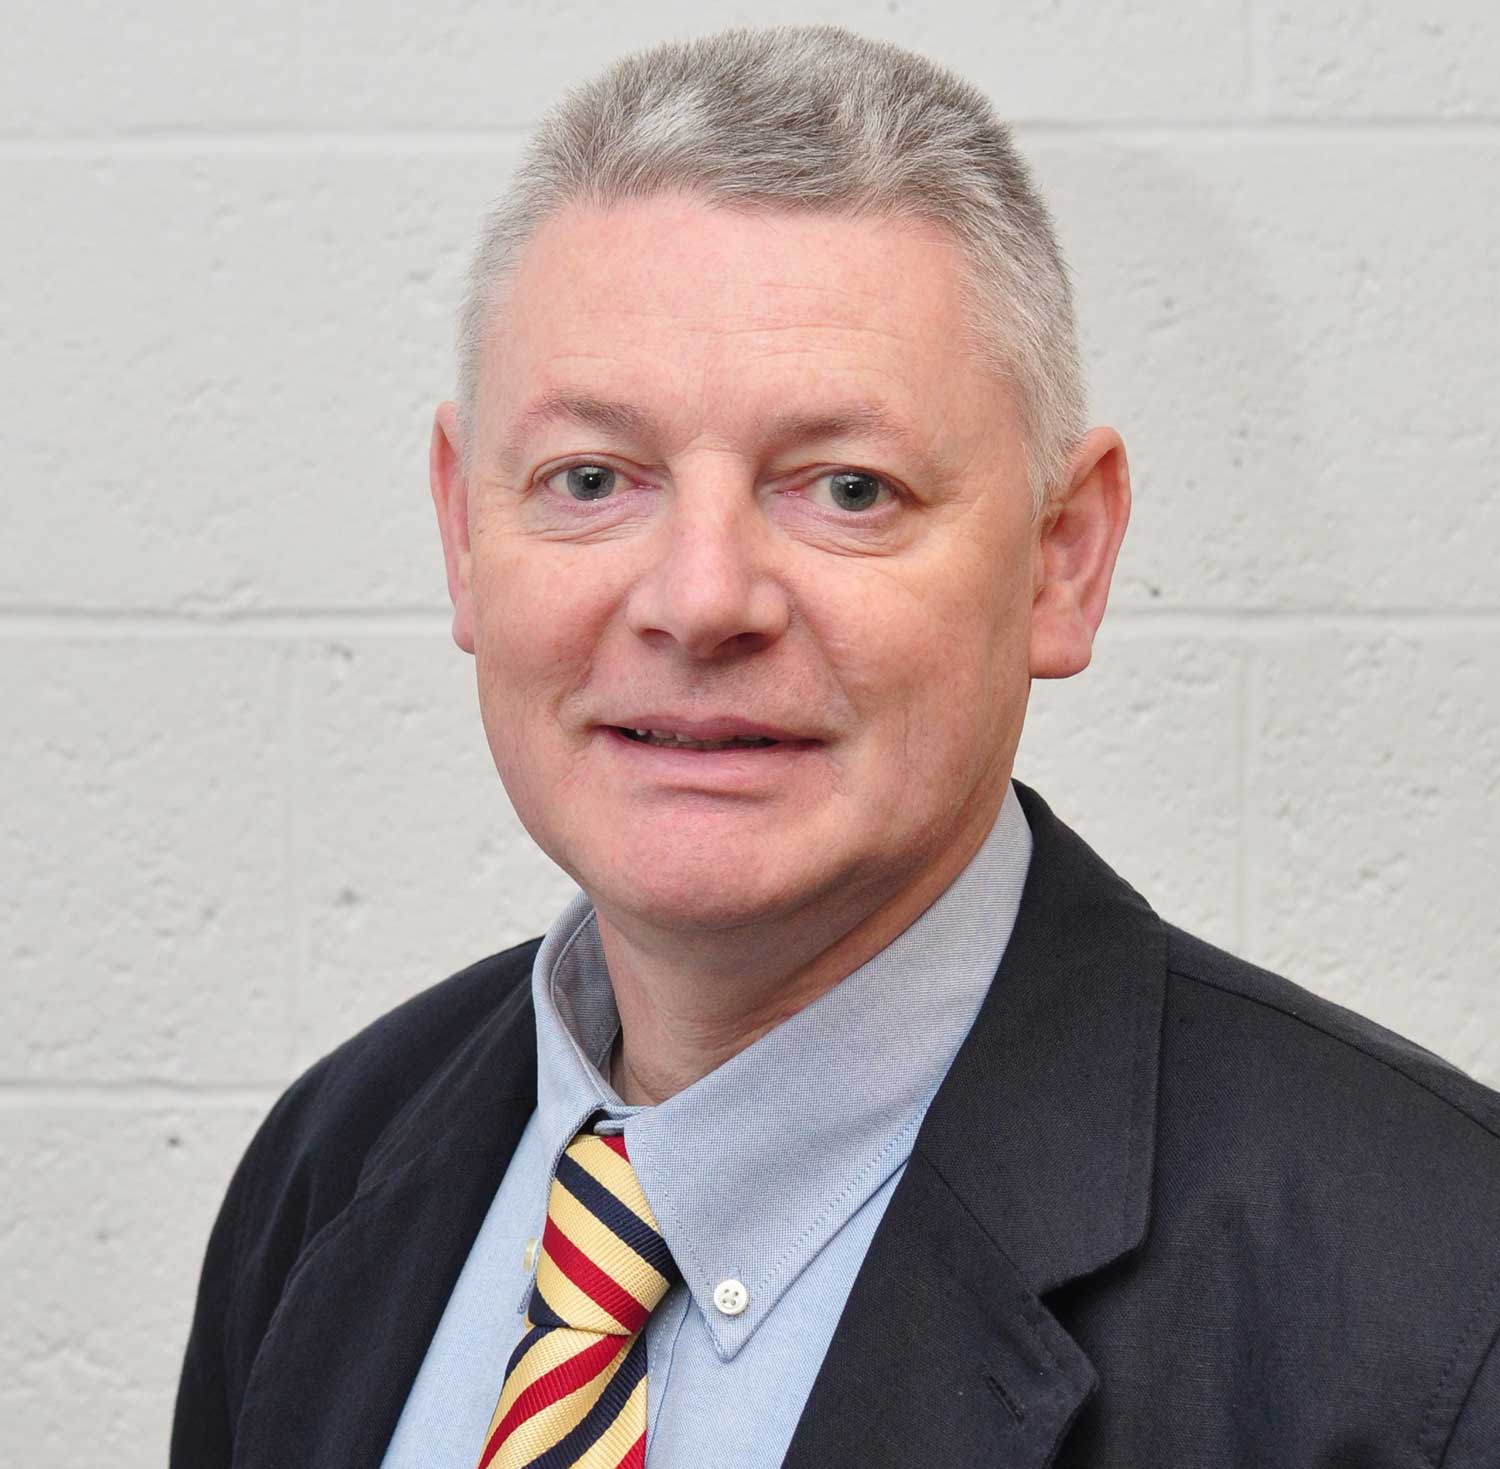 Yorkshire Business Market chairman Mark Lancaster